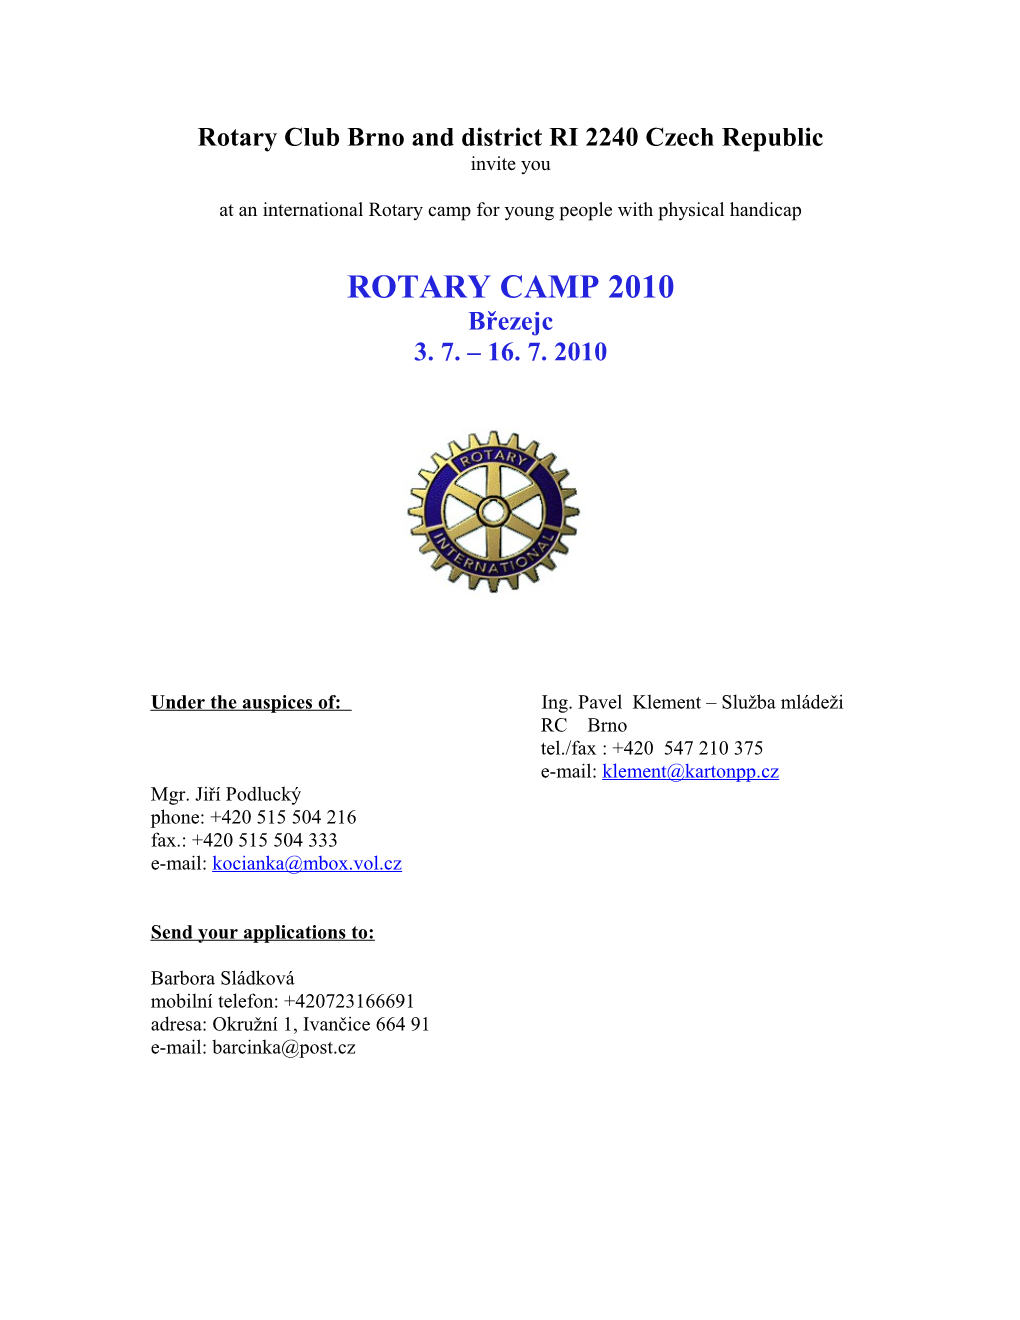 Rotary Club Brno and District RI 2240 Czech Republic